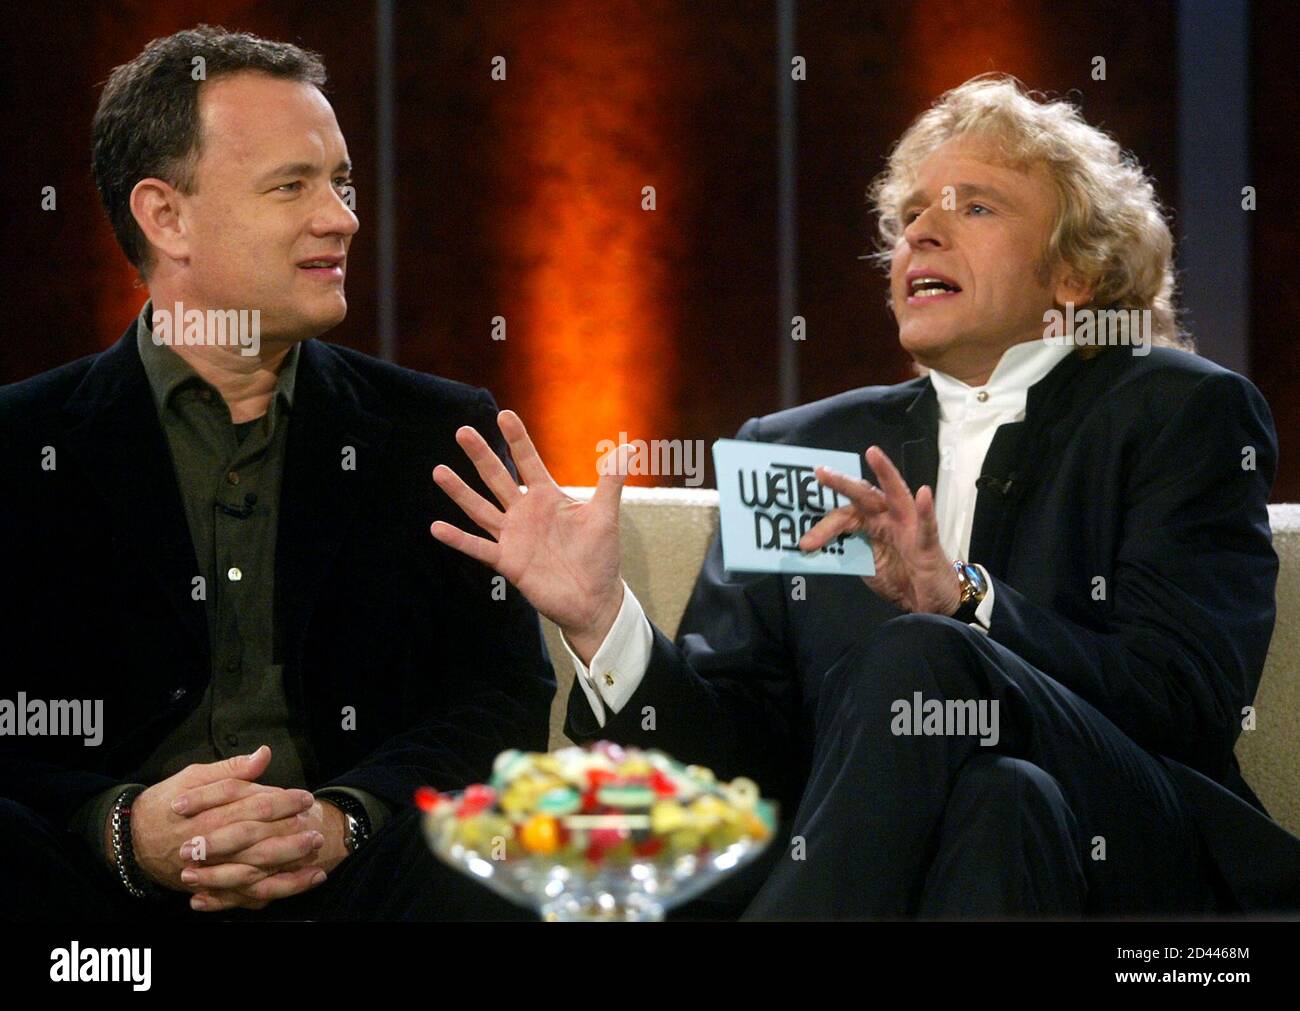 U.S. actor Tom Hanks (L) talks to German TV host Thomas Gottschalk during  the TV show "Wetten, dass...?!" (Bet It...?!) in the southern German town  of Boeblingen near Stuttgart January 25, 2003. "